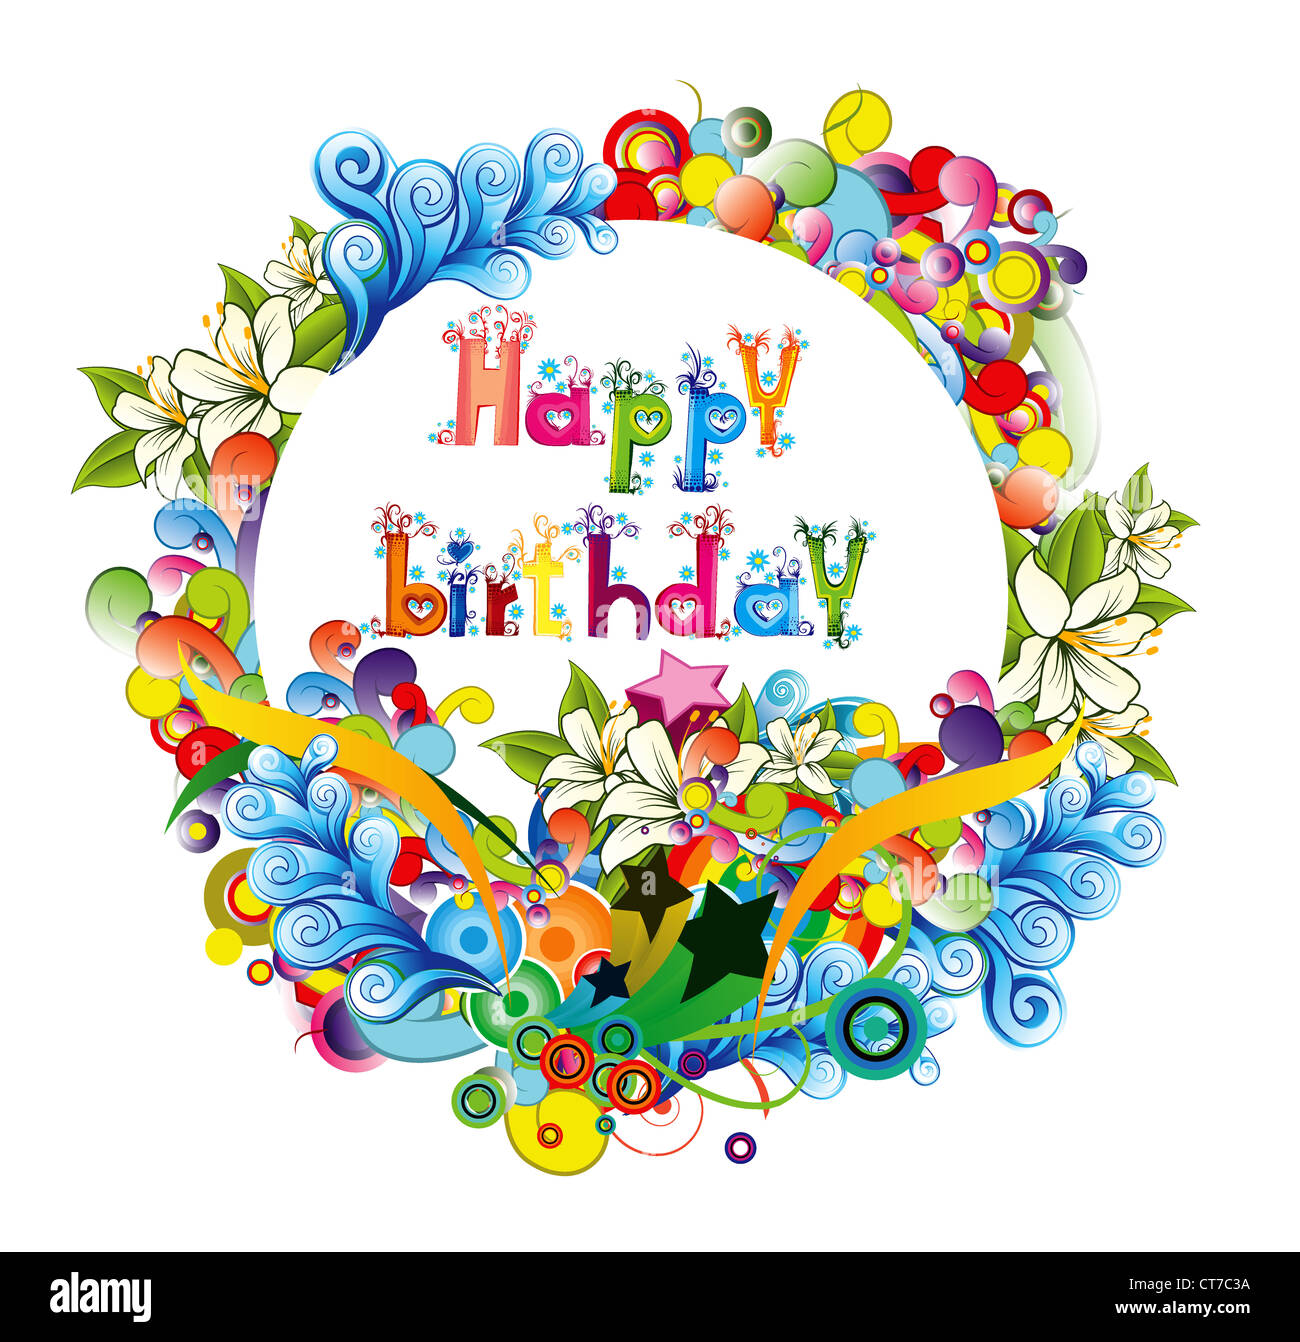 happy birthday vector illustration Stock Photo - Alamy